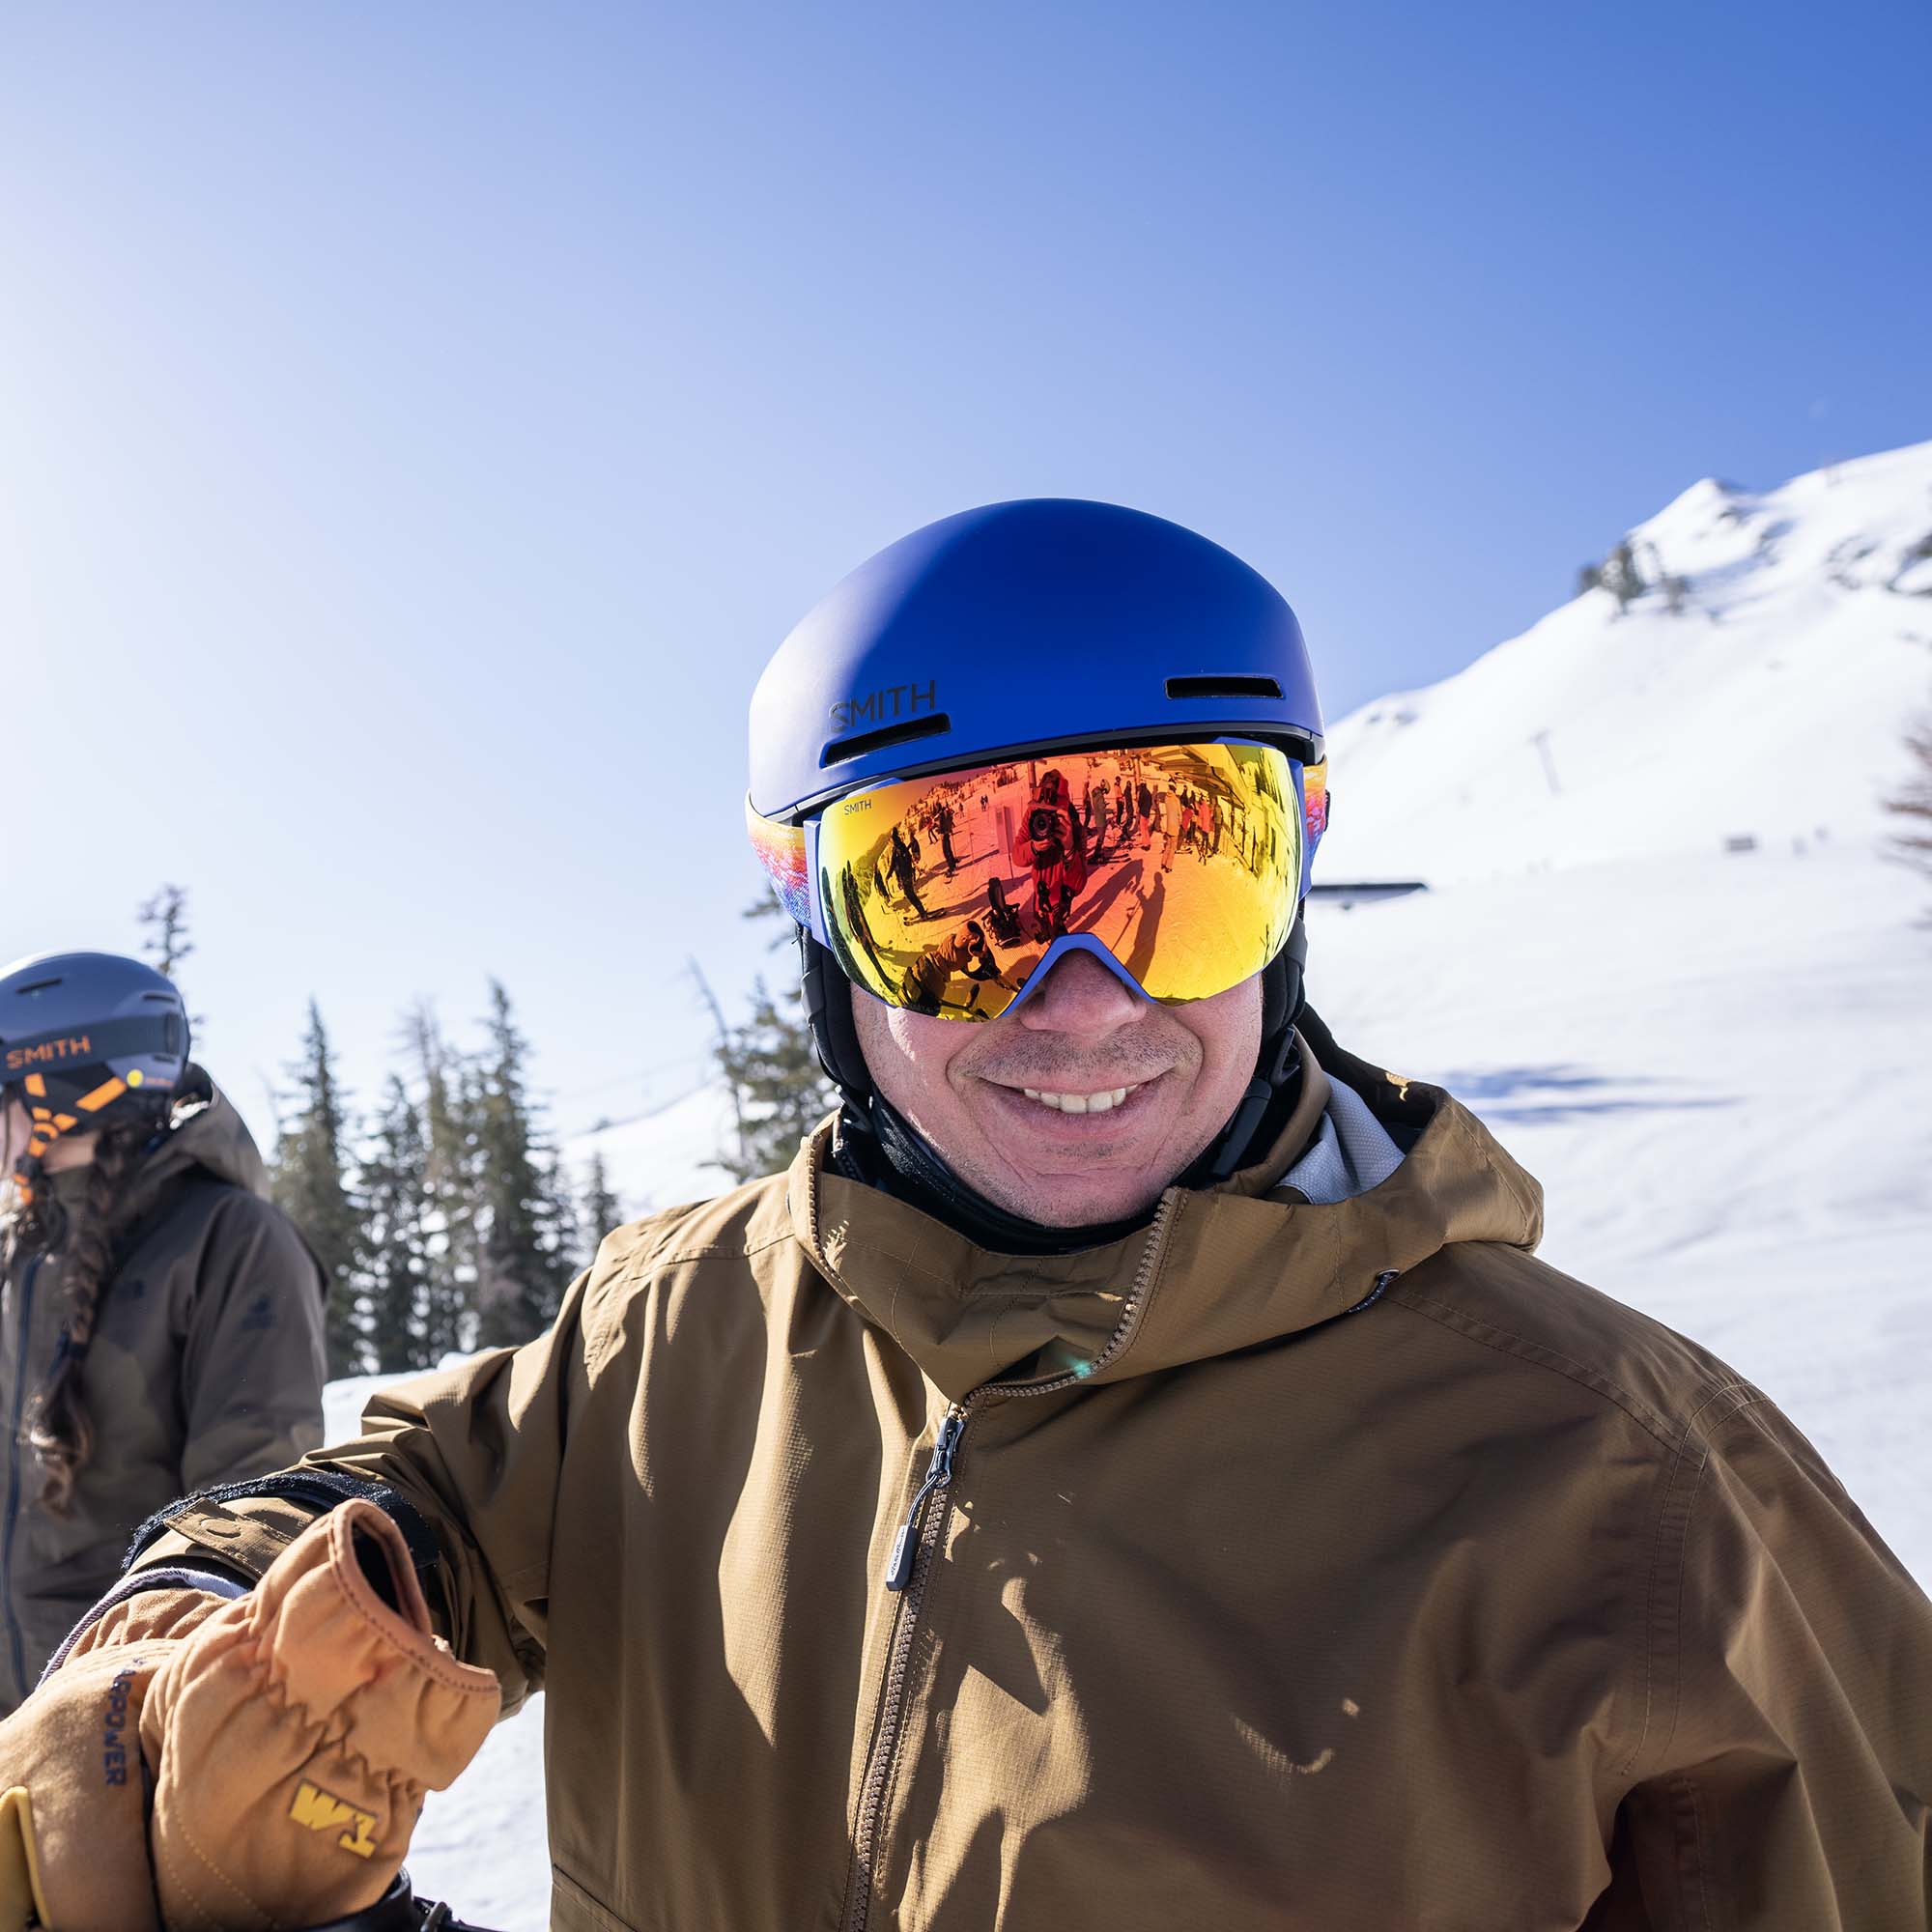 Smith I/O MAG Snowboard/Ski Goggles